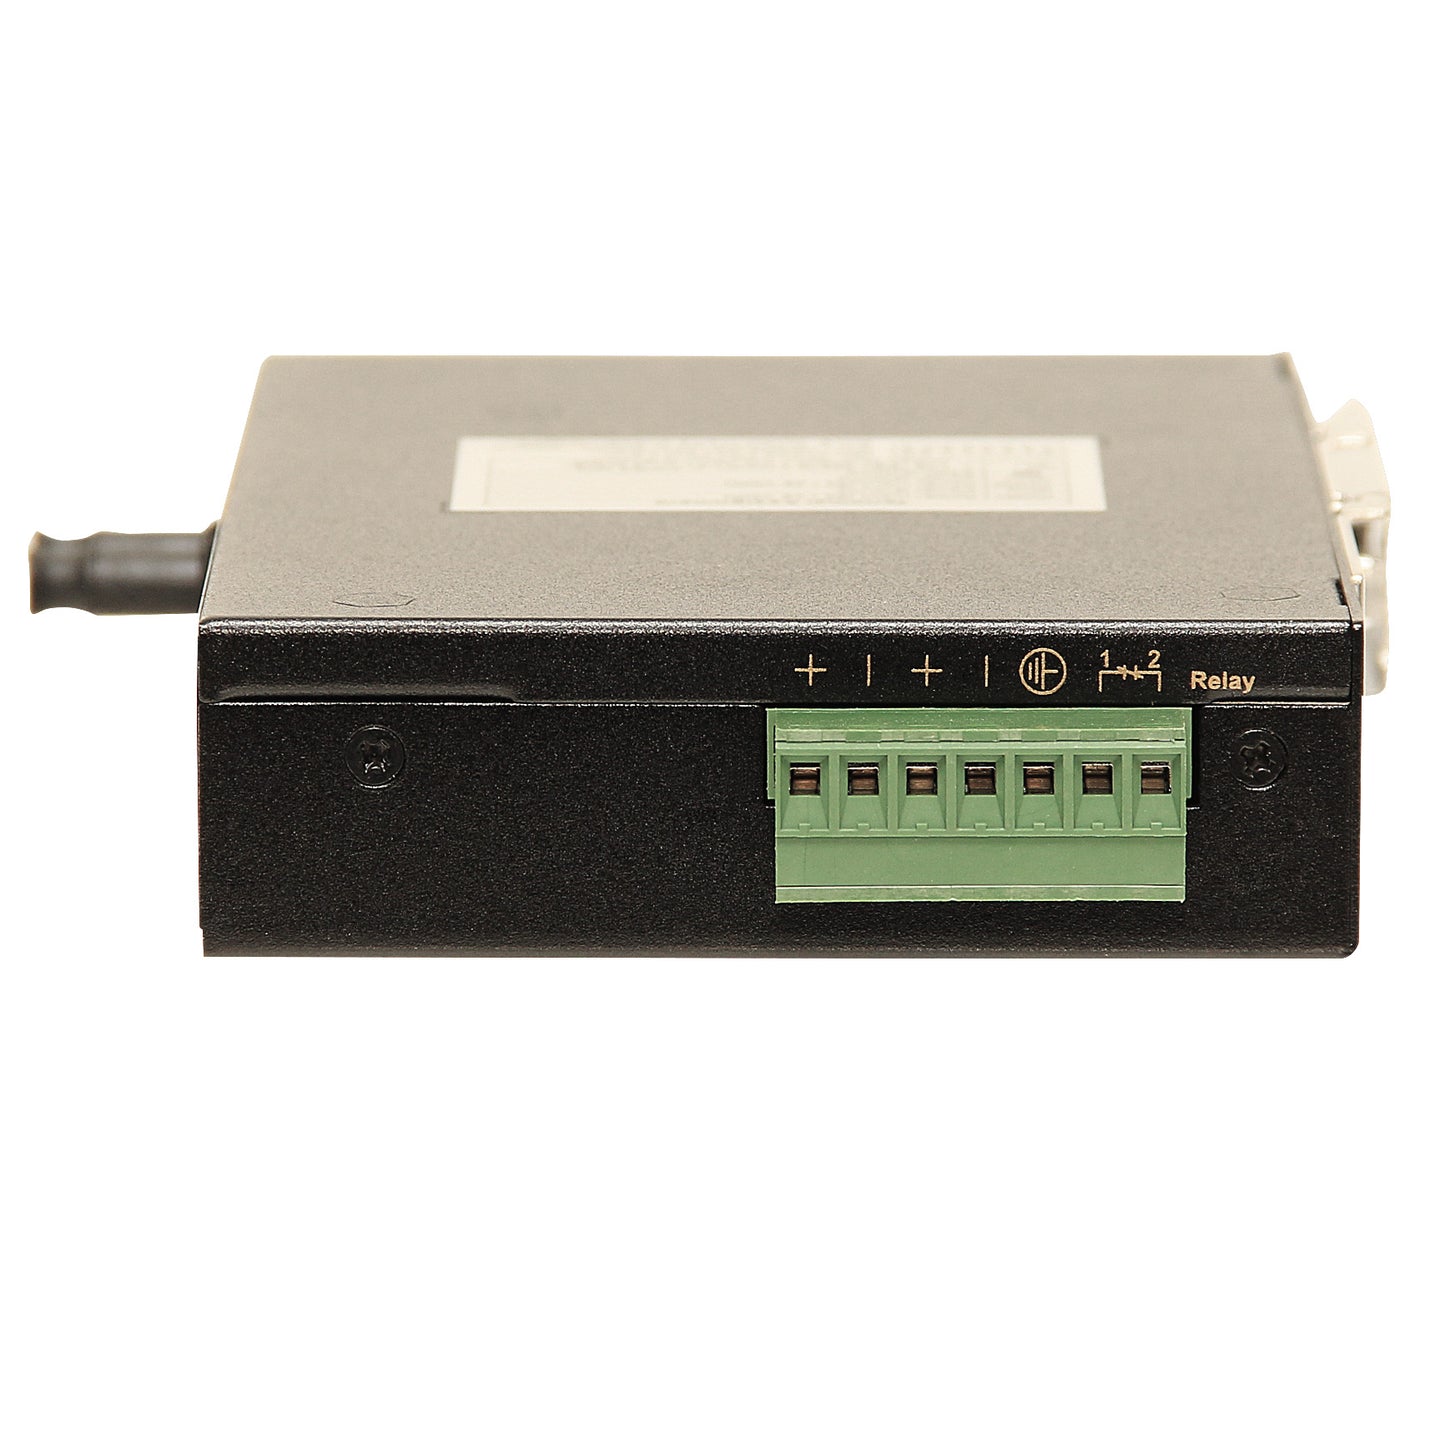 EX45915-5 - Hardened Unmanaged Gigabit Ethernet Switch 5-port 10/100/1000BASE-T (4 x PoE) + 1-port Gigabit Fiber (ST)